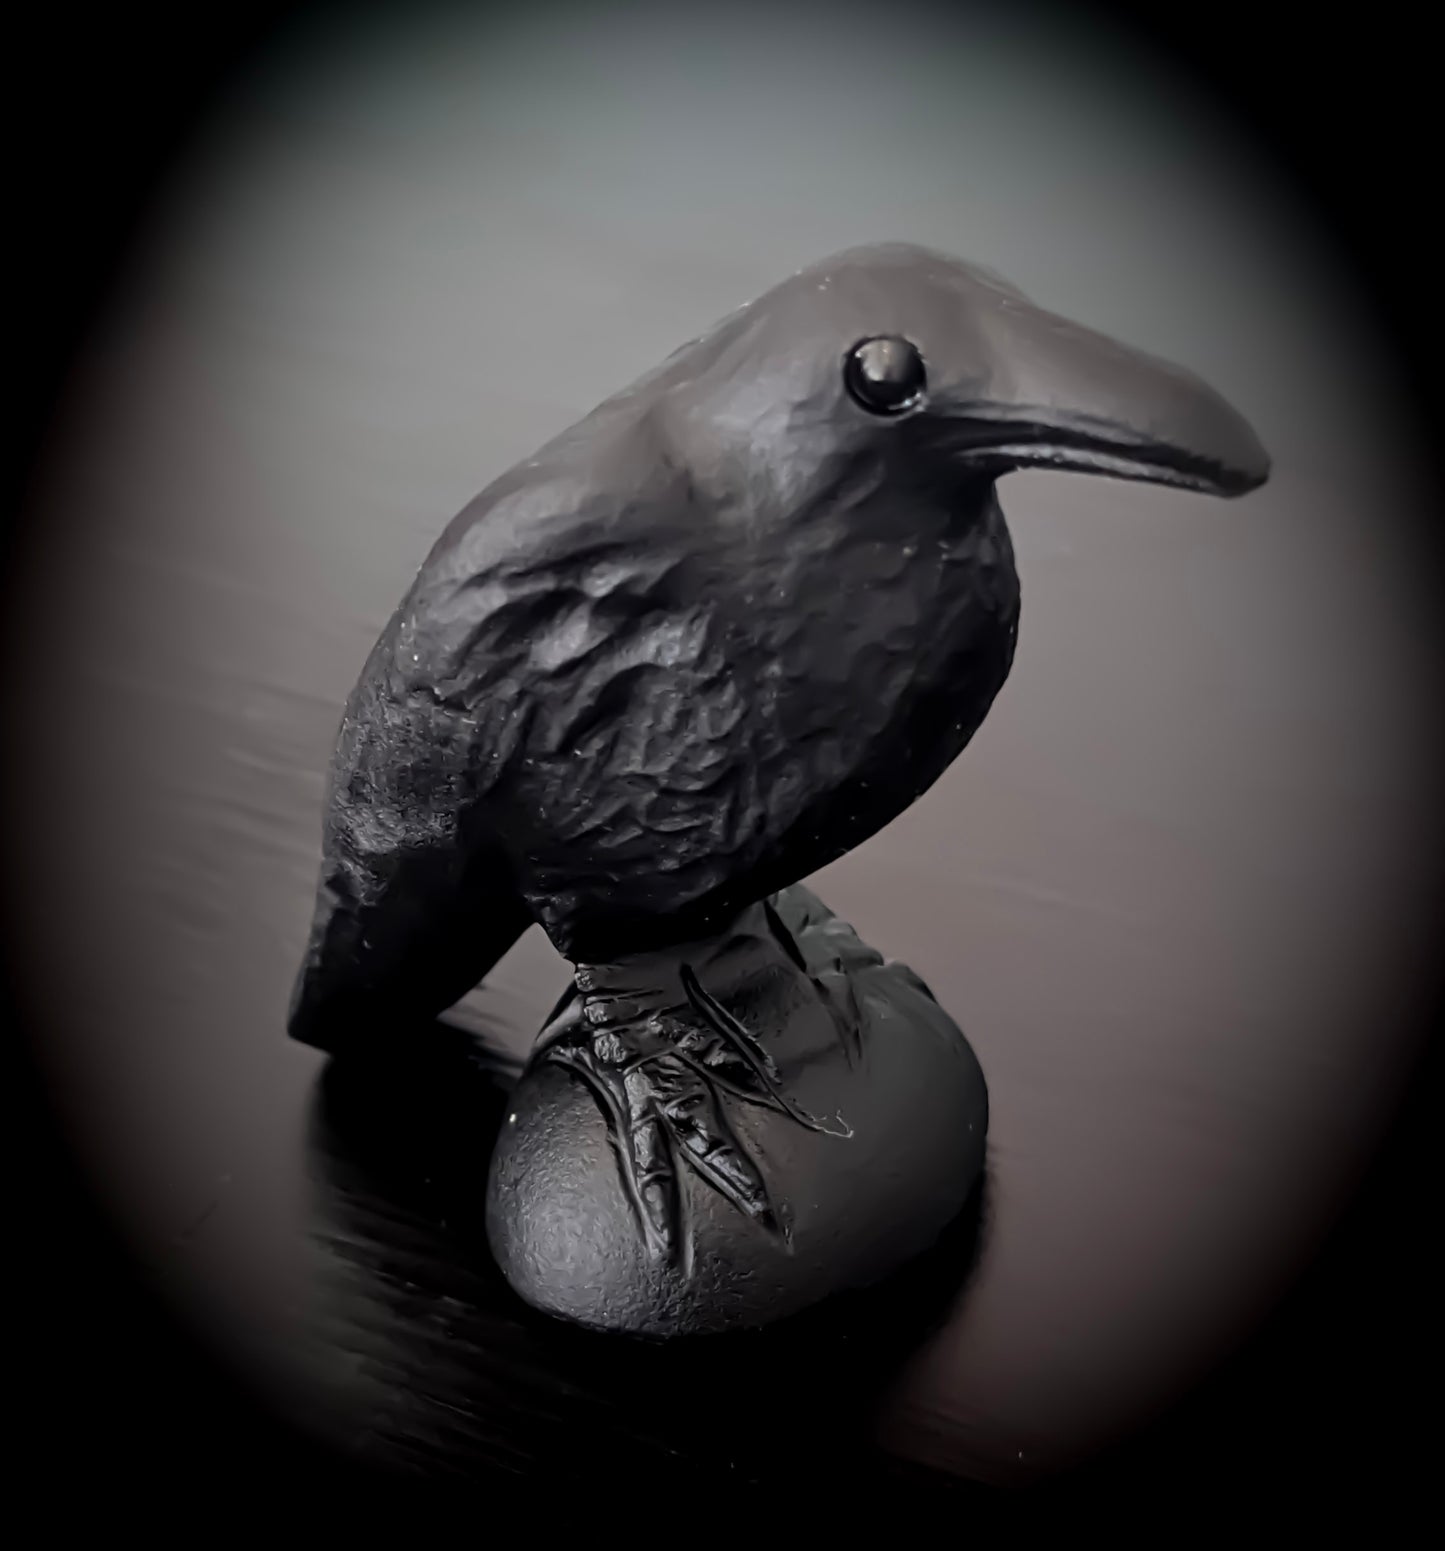 Grumpy The Raven